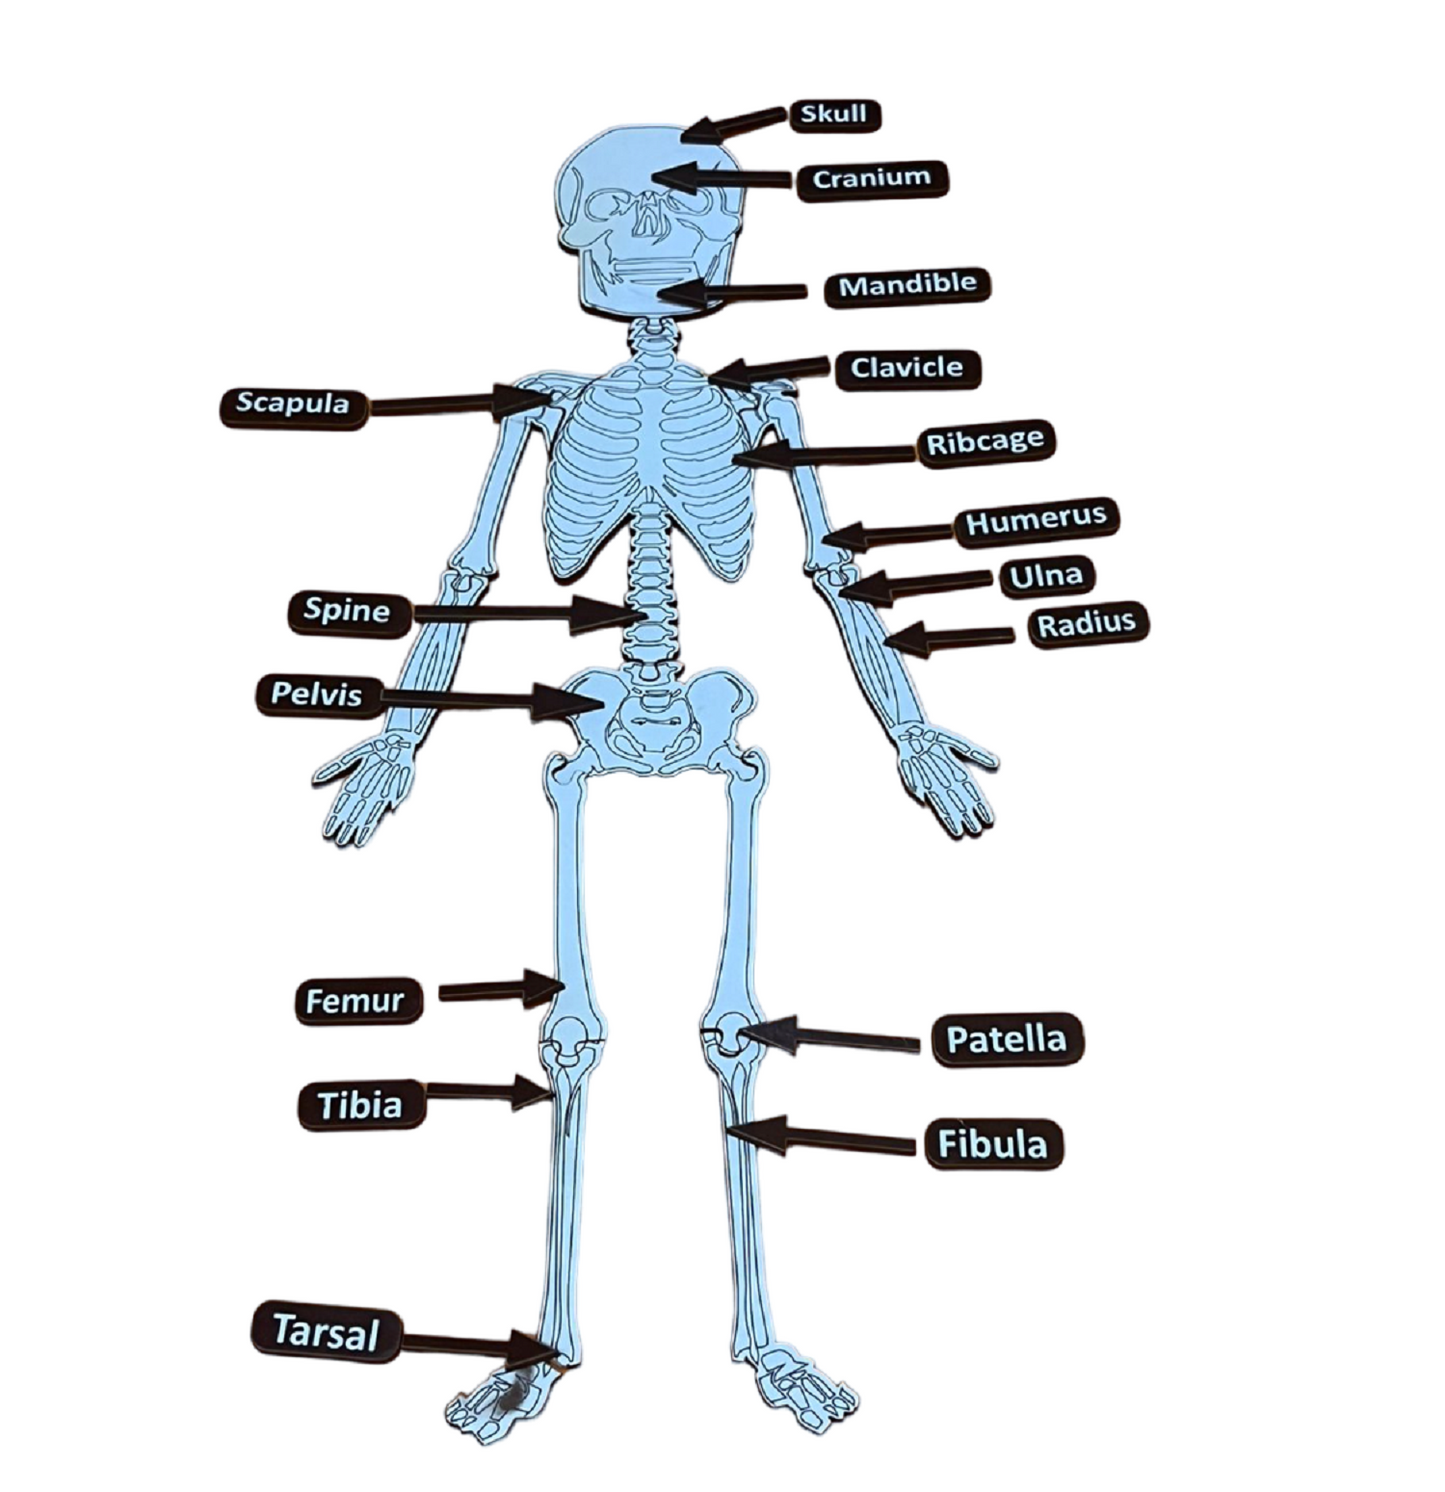 Buy DIY Skeletal System Learning Board for Kids - SkilloToys.com